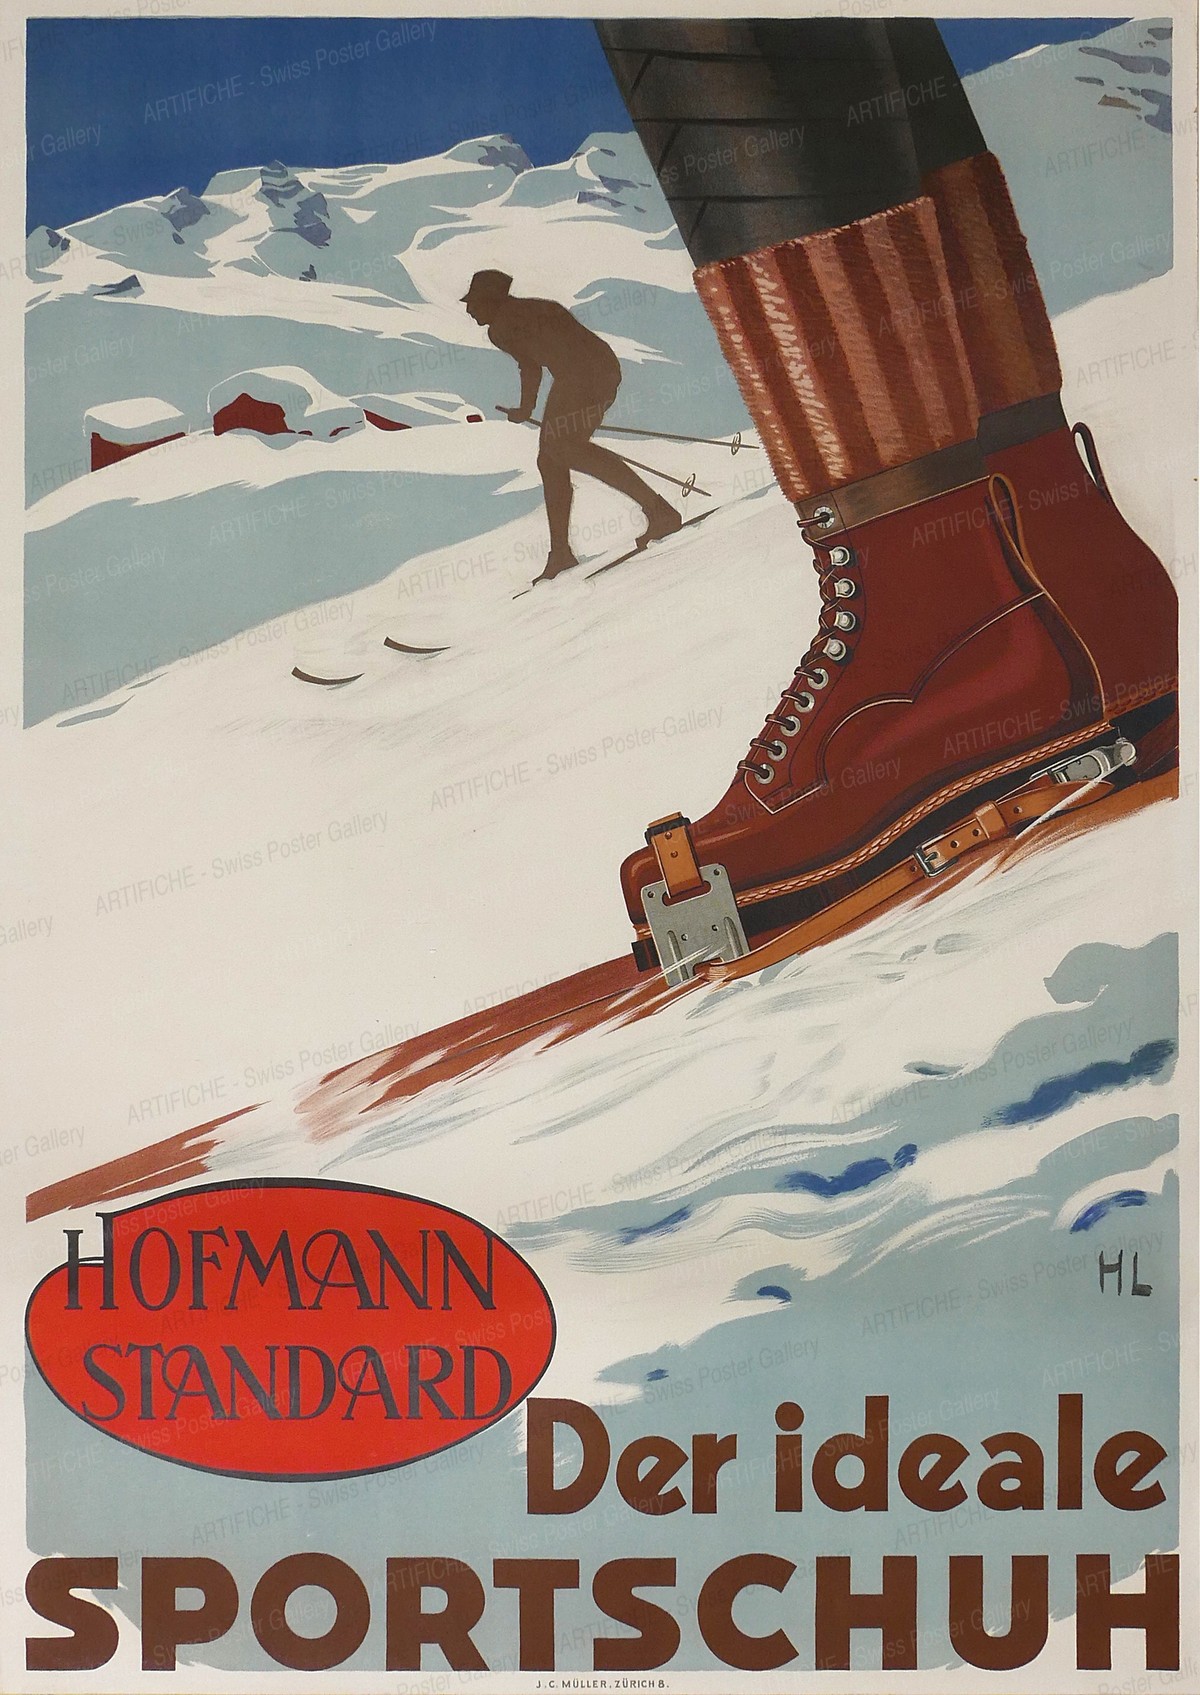 Hofmann Standard – Der ideale Sportschuh, Hans Lehmann